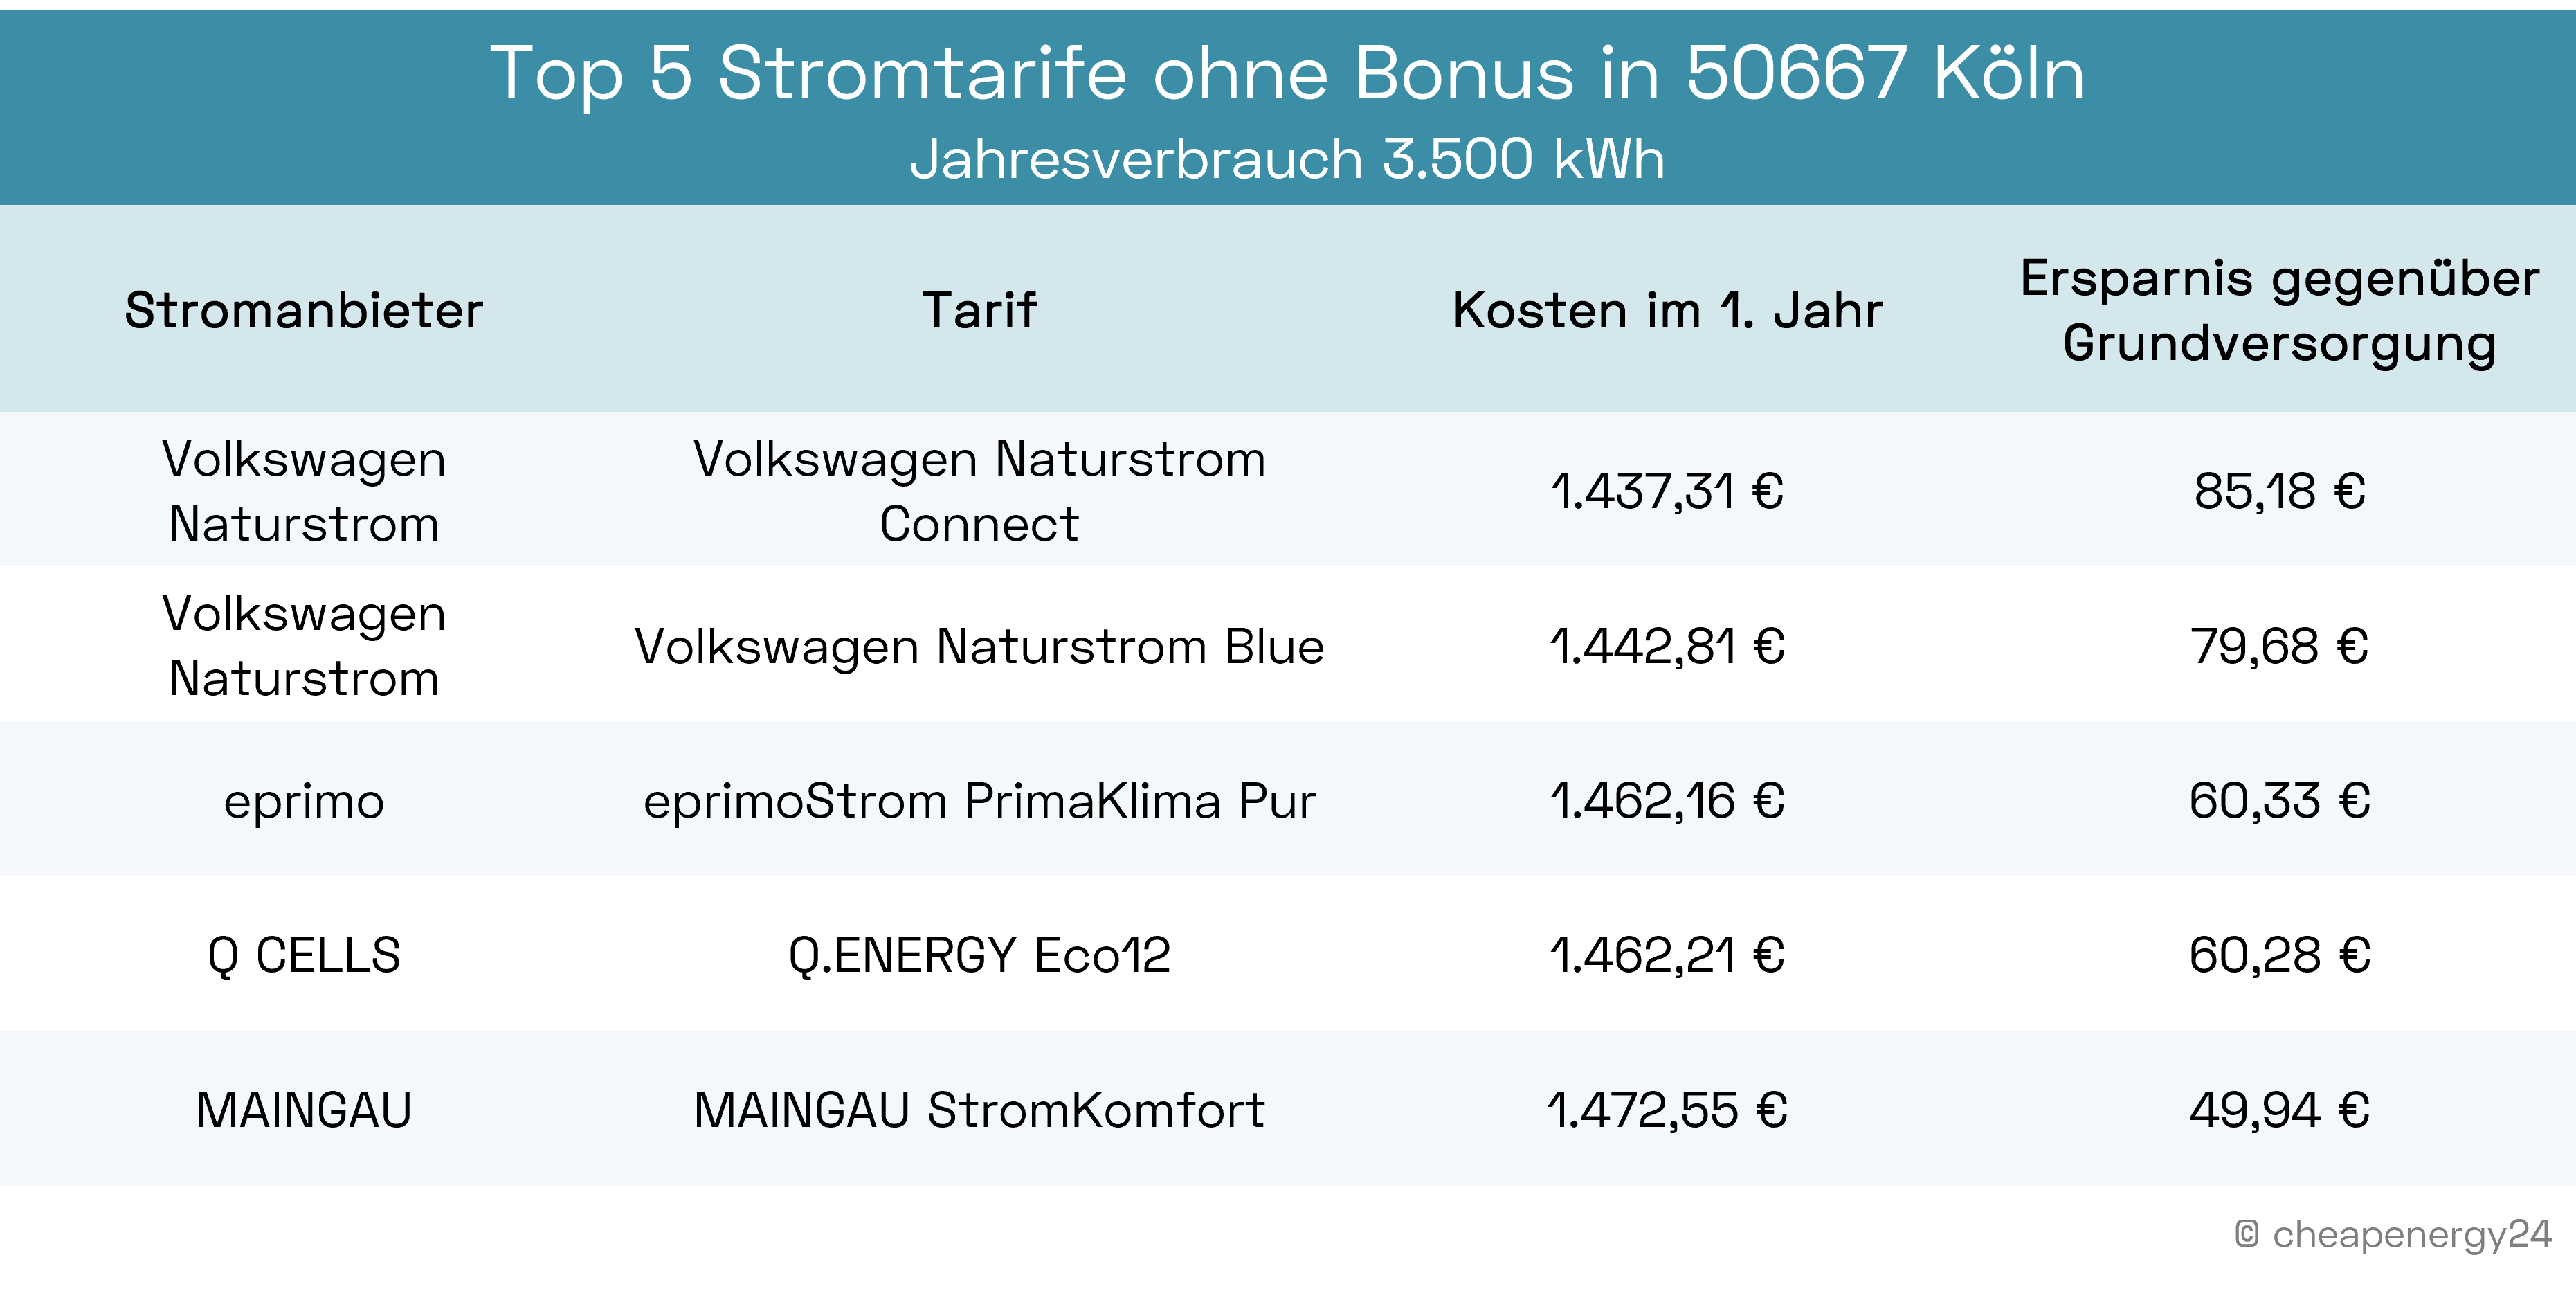 Die besten Stromtarife ohne Bonus in Köln